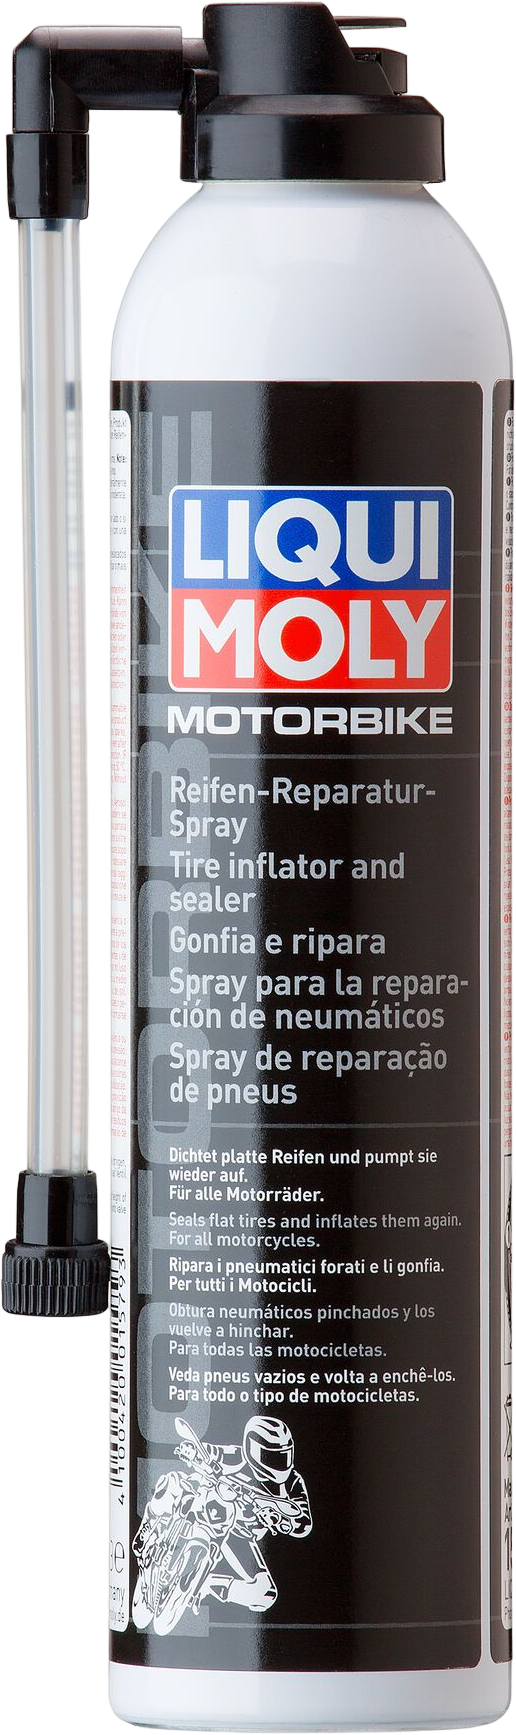 Liqui Moly Motorbike Bandenherstellingsspray, 12 x 300 ml detail 2